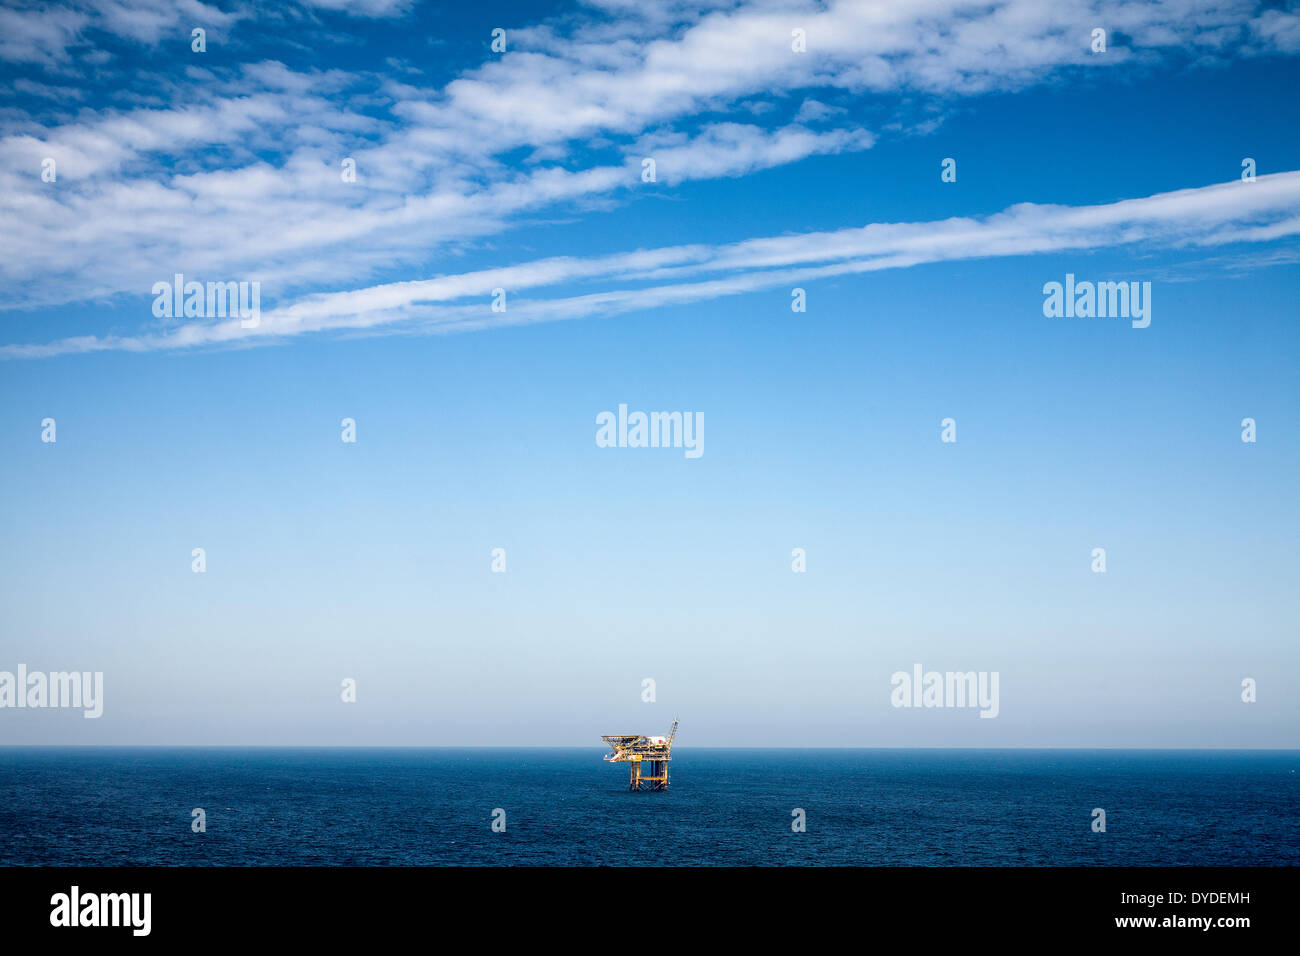 Oil rig in the North Sea. Stock Photo